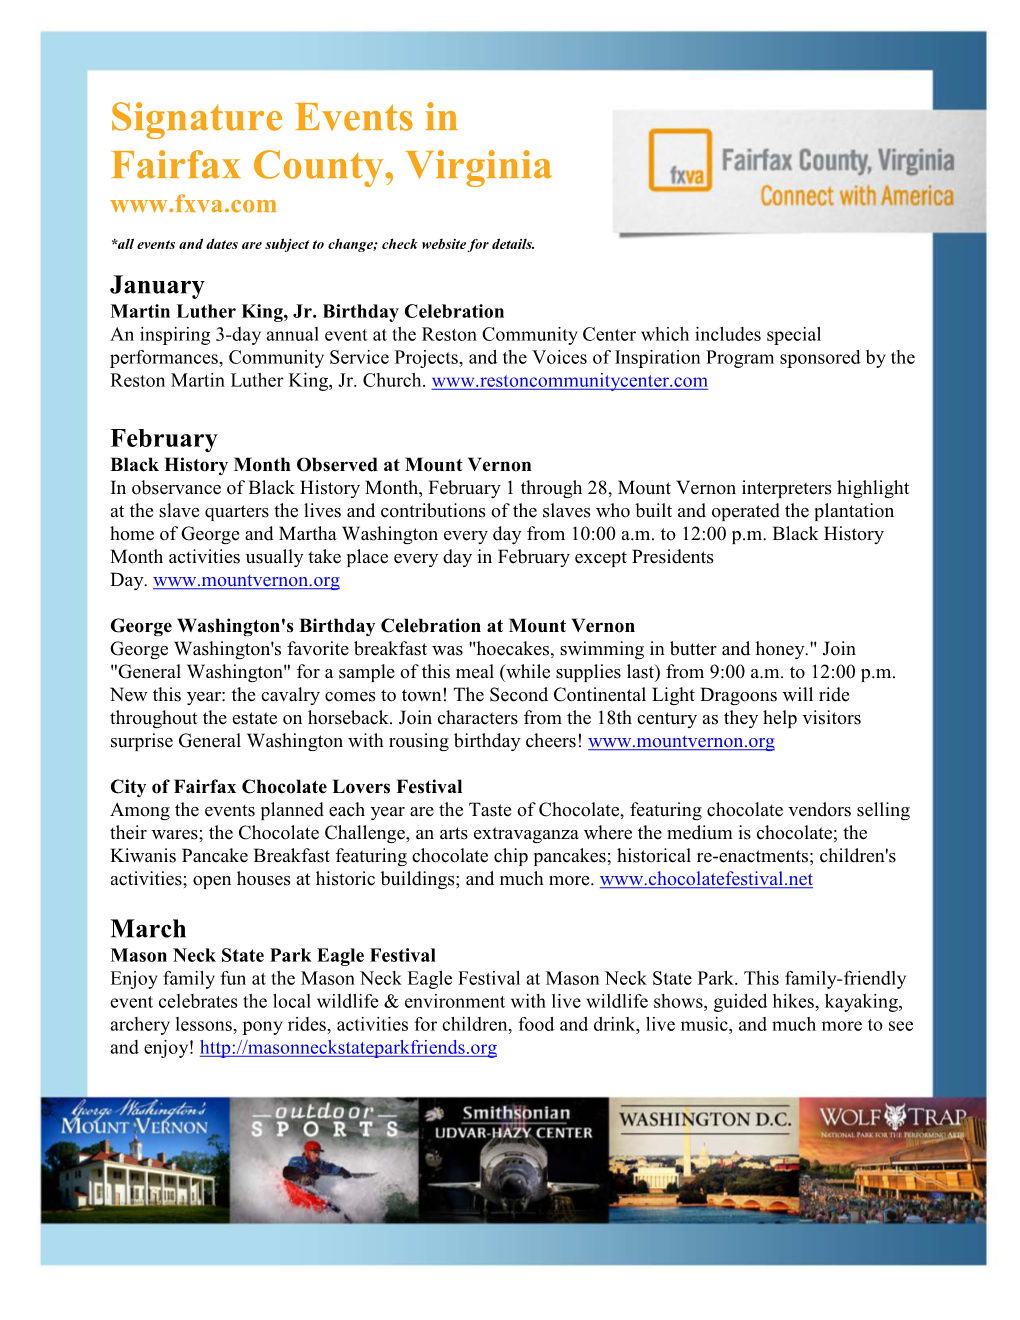 Signature Events in Fairfax County, Virginia